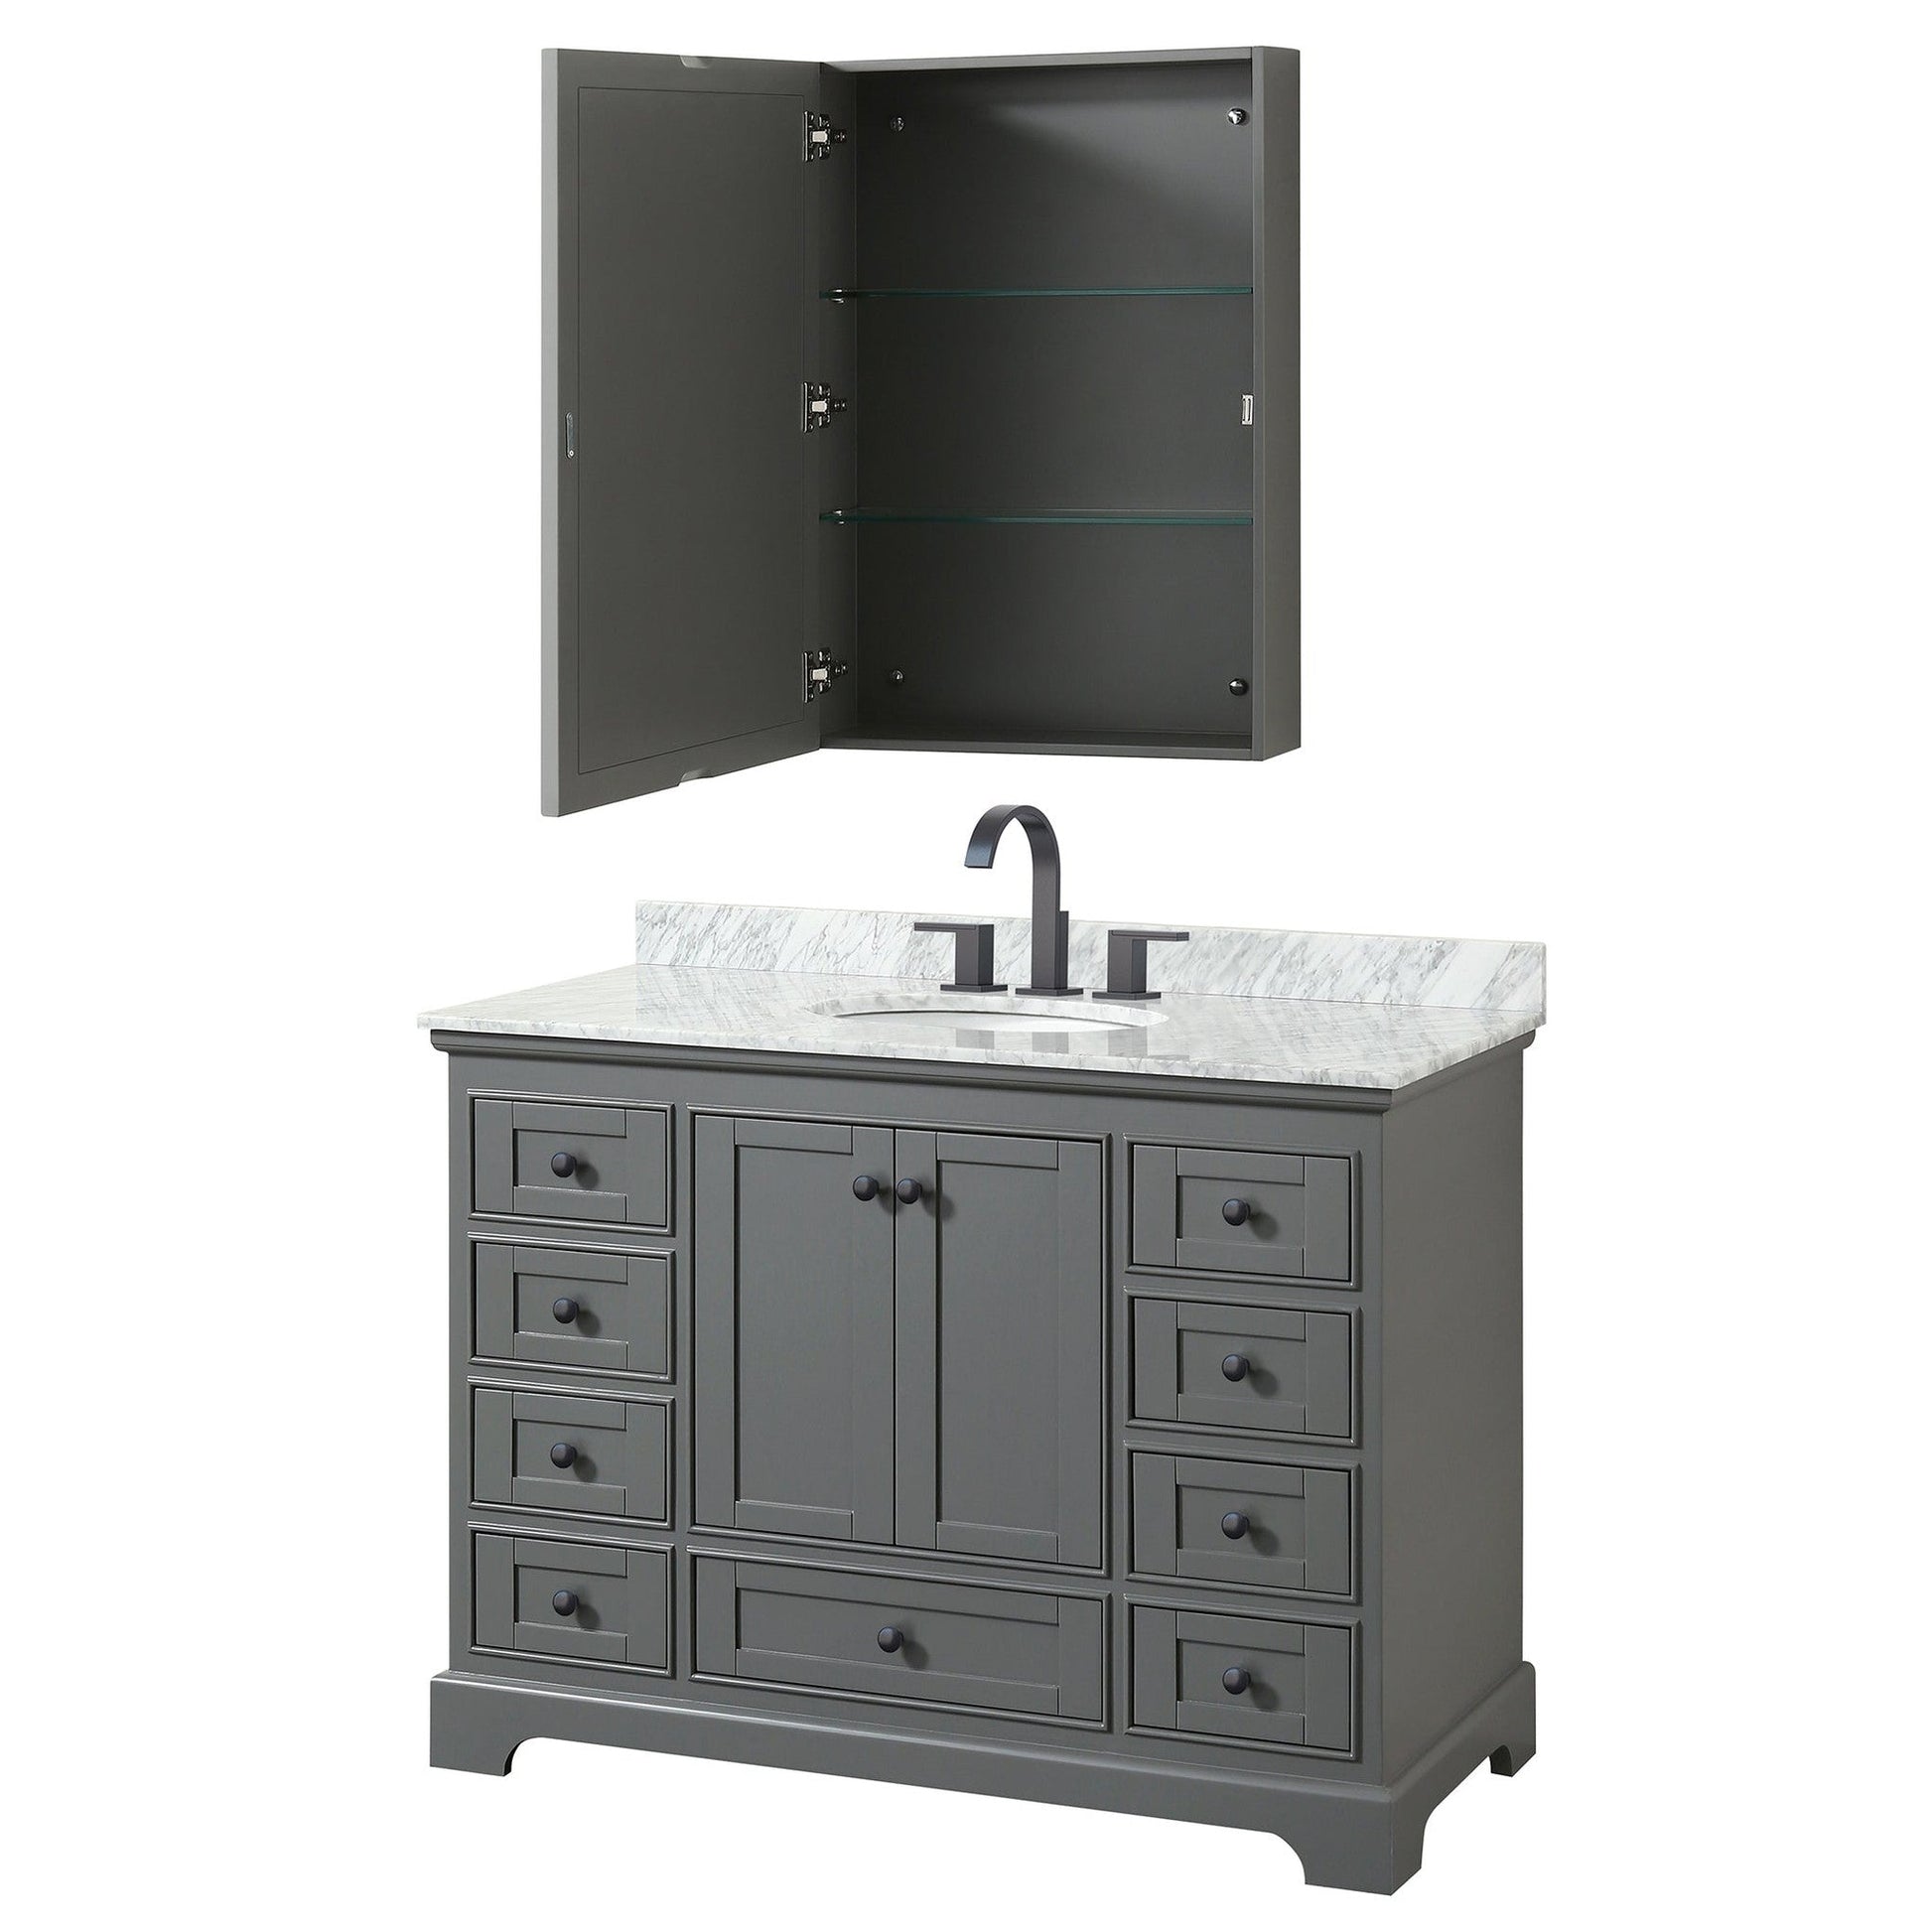 Deborah 48" Single Bathroom Vanity in Dark Gray, White Carrara Marble Countertop, Undermount Oval Sink, Matte Black Trim, Medicine Cabinet